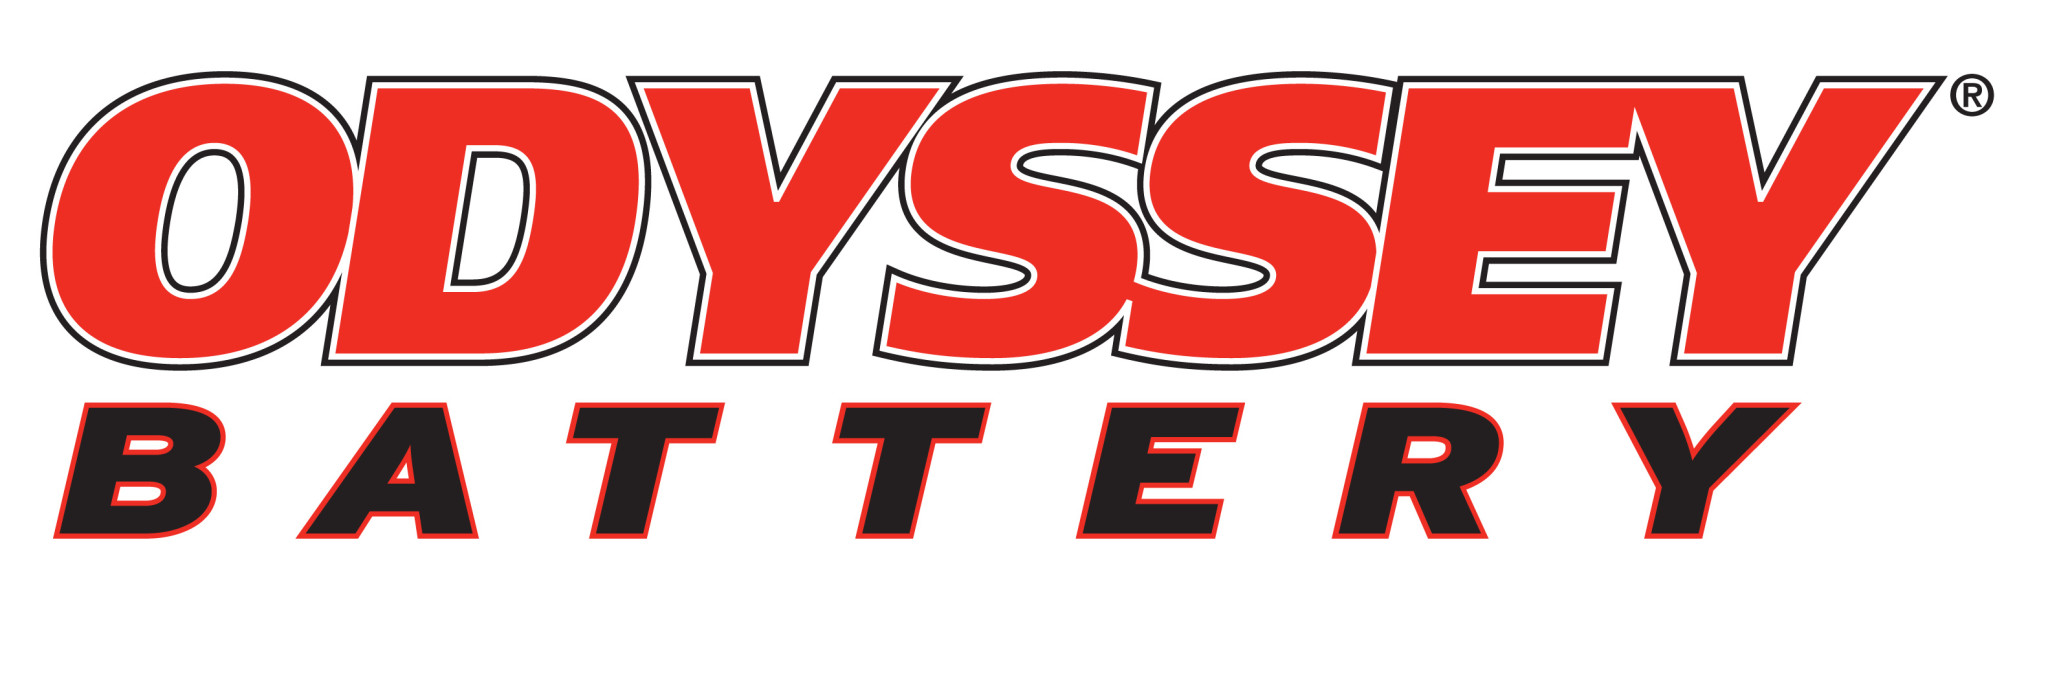 Odyssey BATTERY logo.jpg